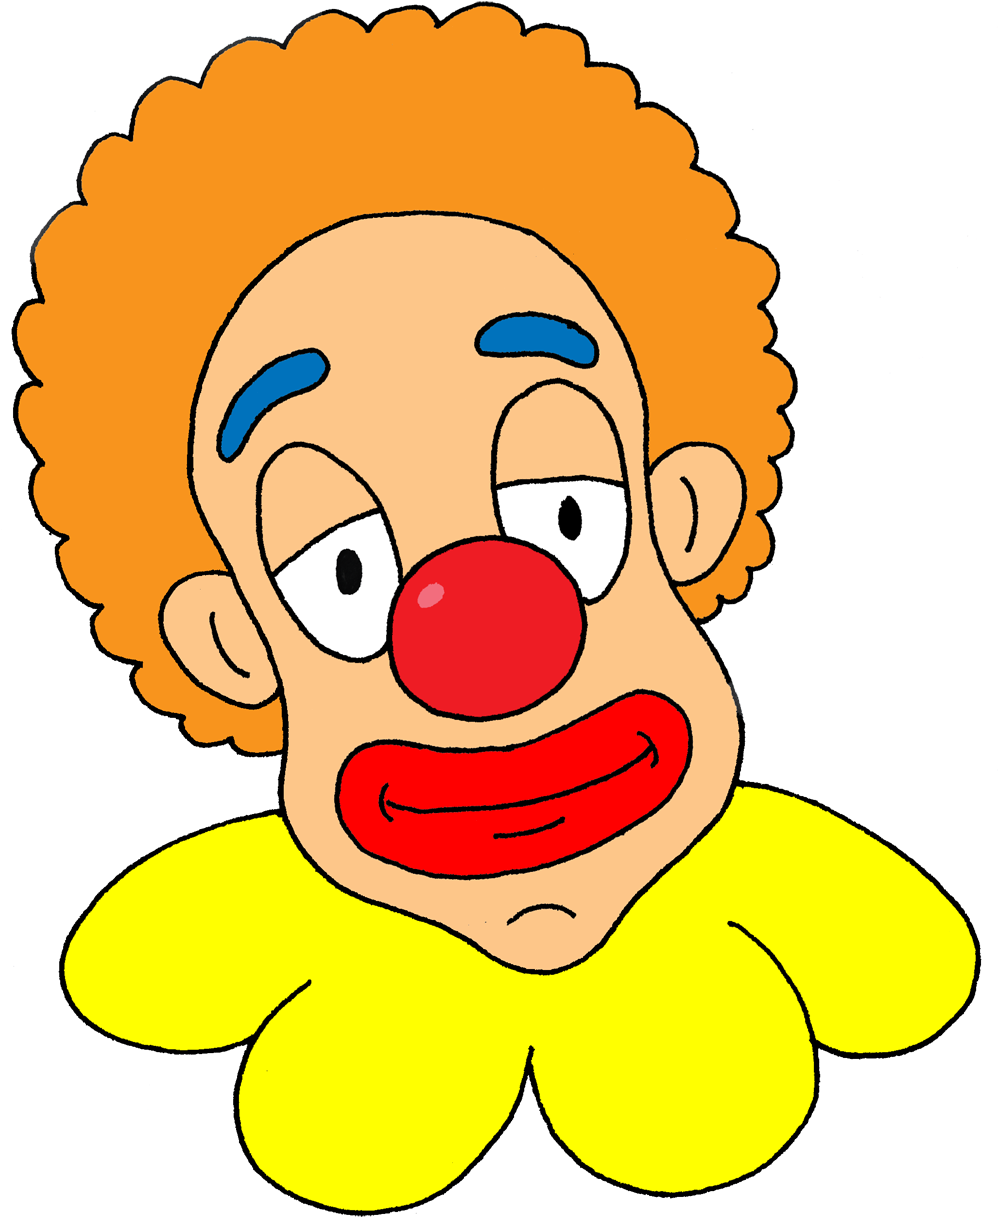 Image Of Clown Face Clipart 9 Free Clown Clipart 1 - Clown Head Transparent Background (1000x1240)